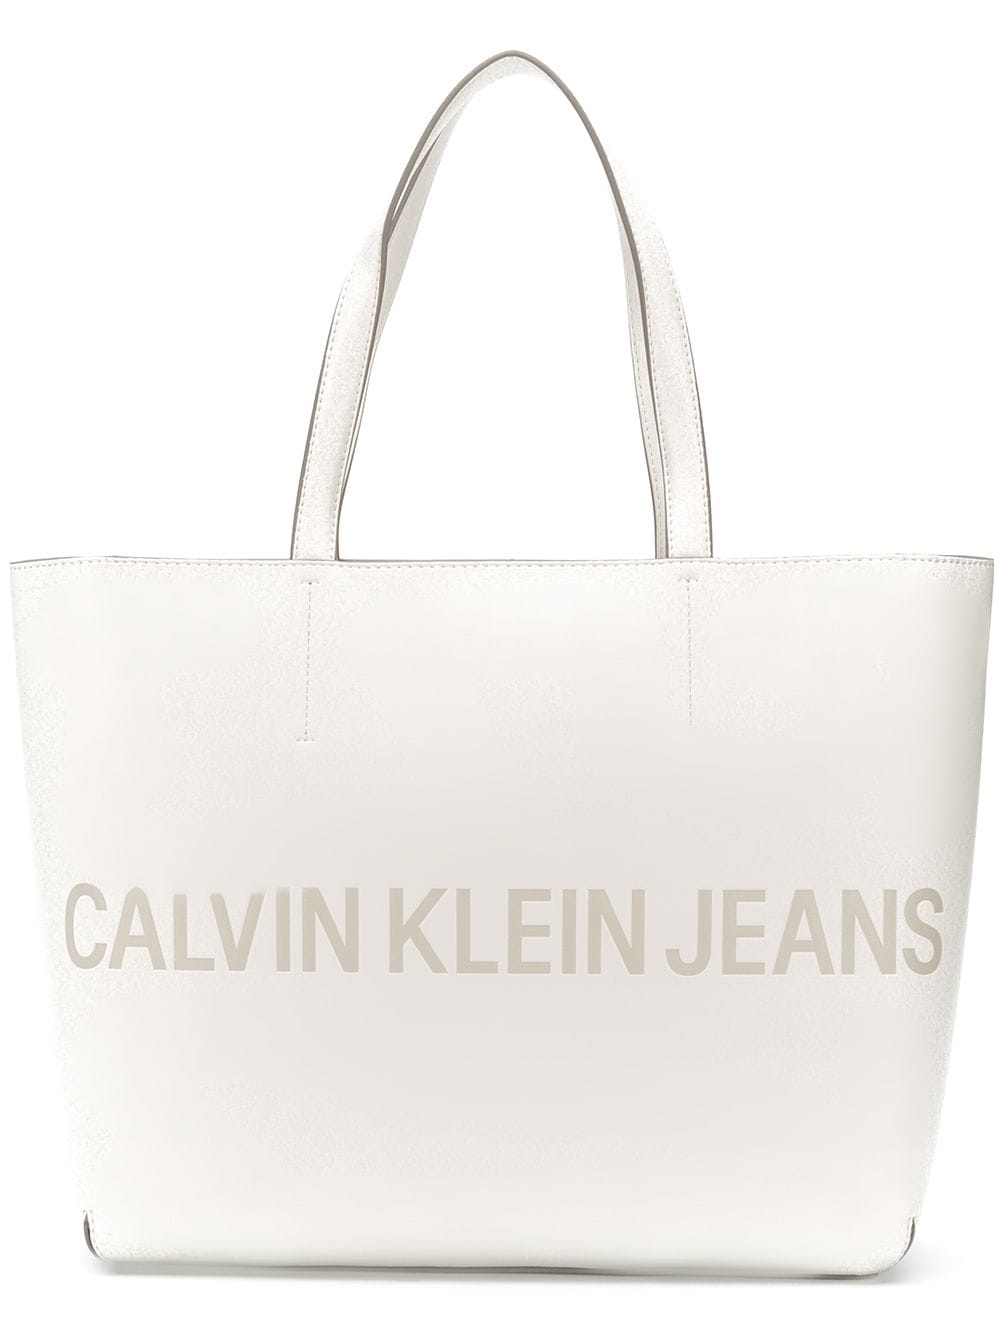 calvin klein jeans white bag